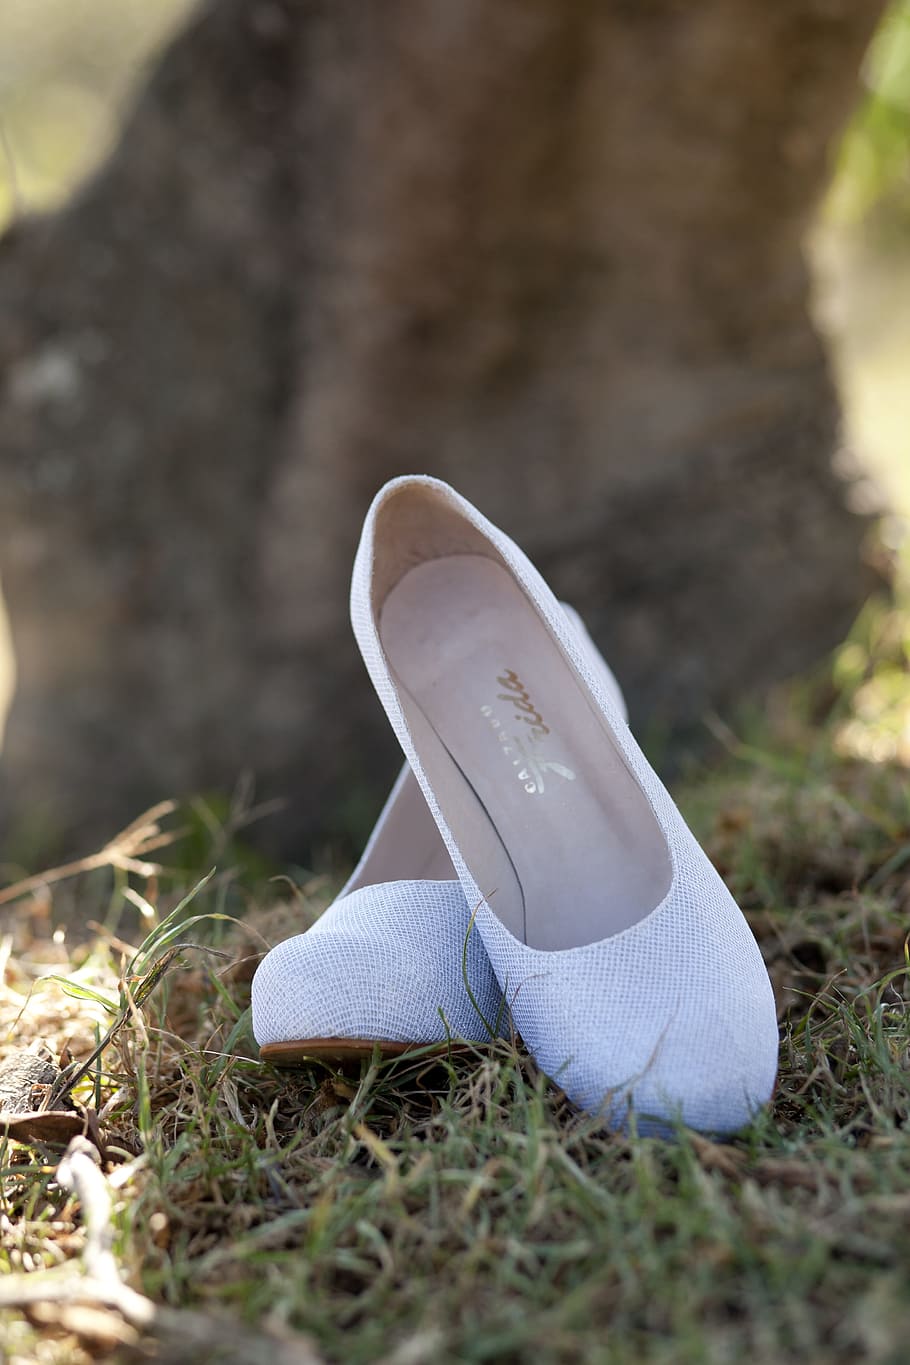 shoes, whites, marriage, wedding, white, shoe, land, day, nature, close-up